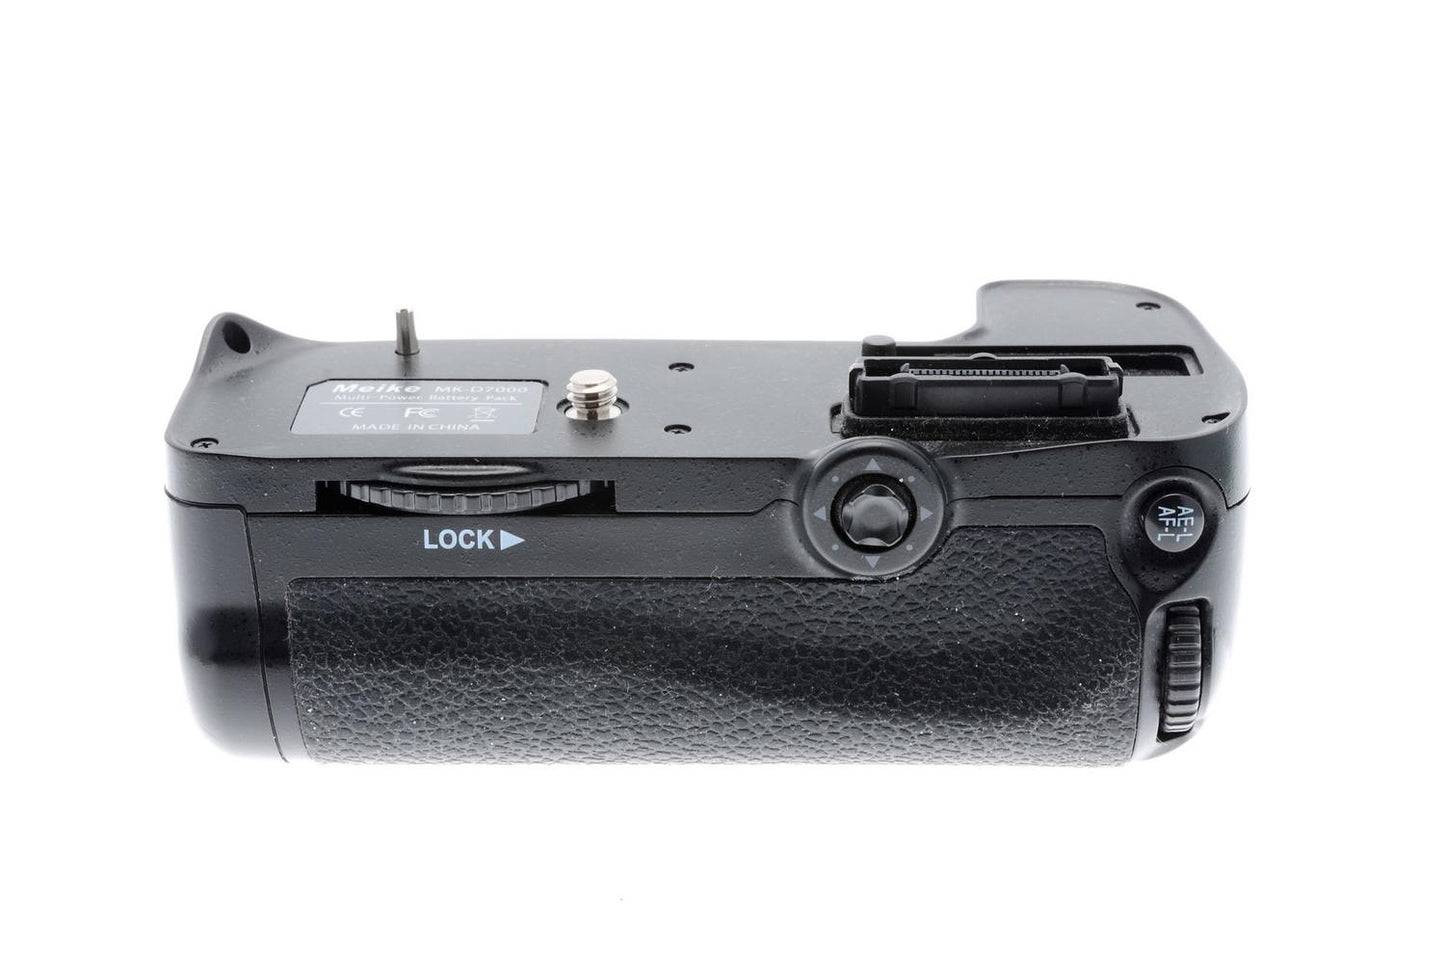 Meike Multi-Power Battery Pack for Nikon D7000 - Accessory